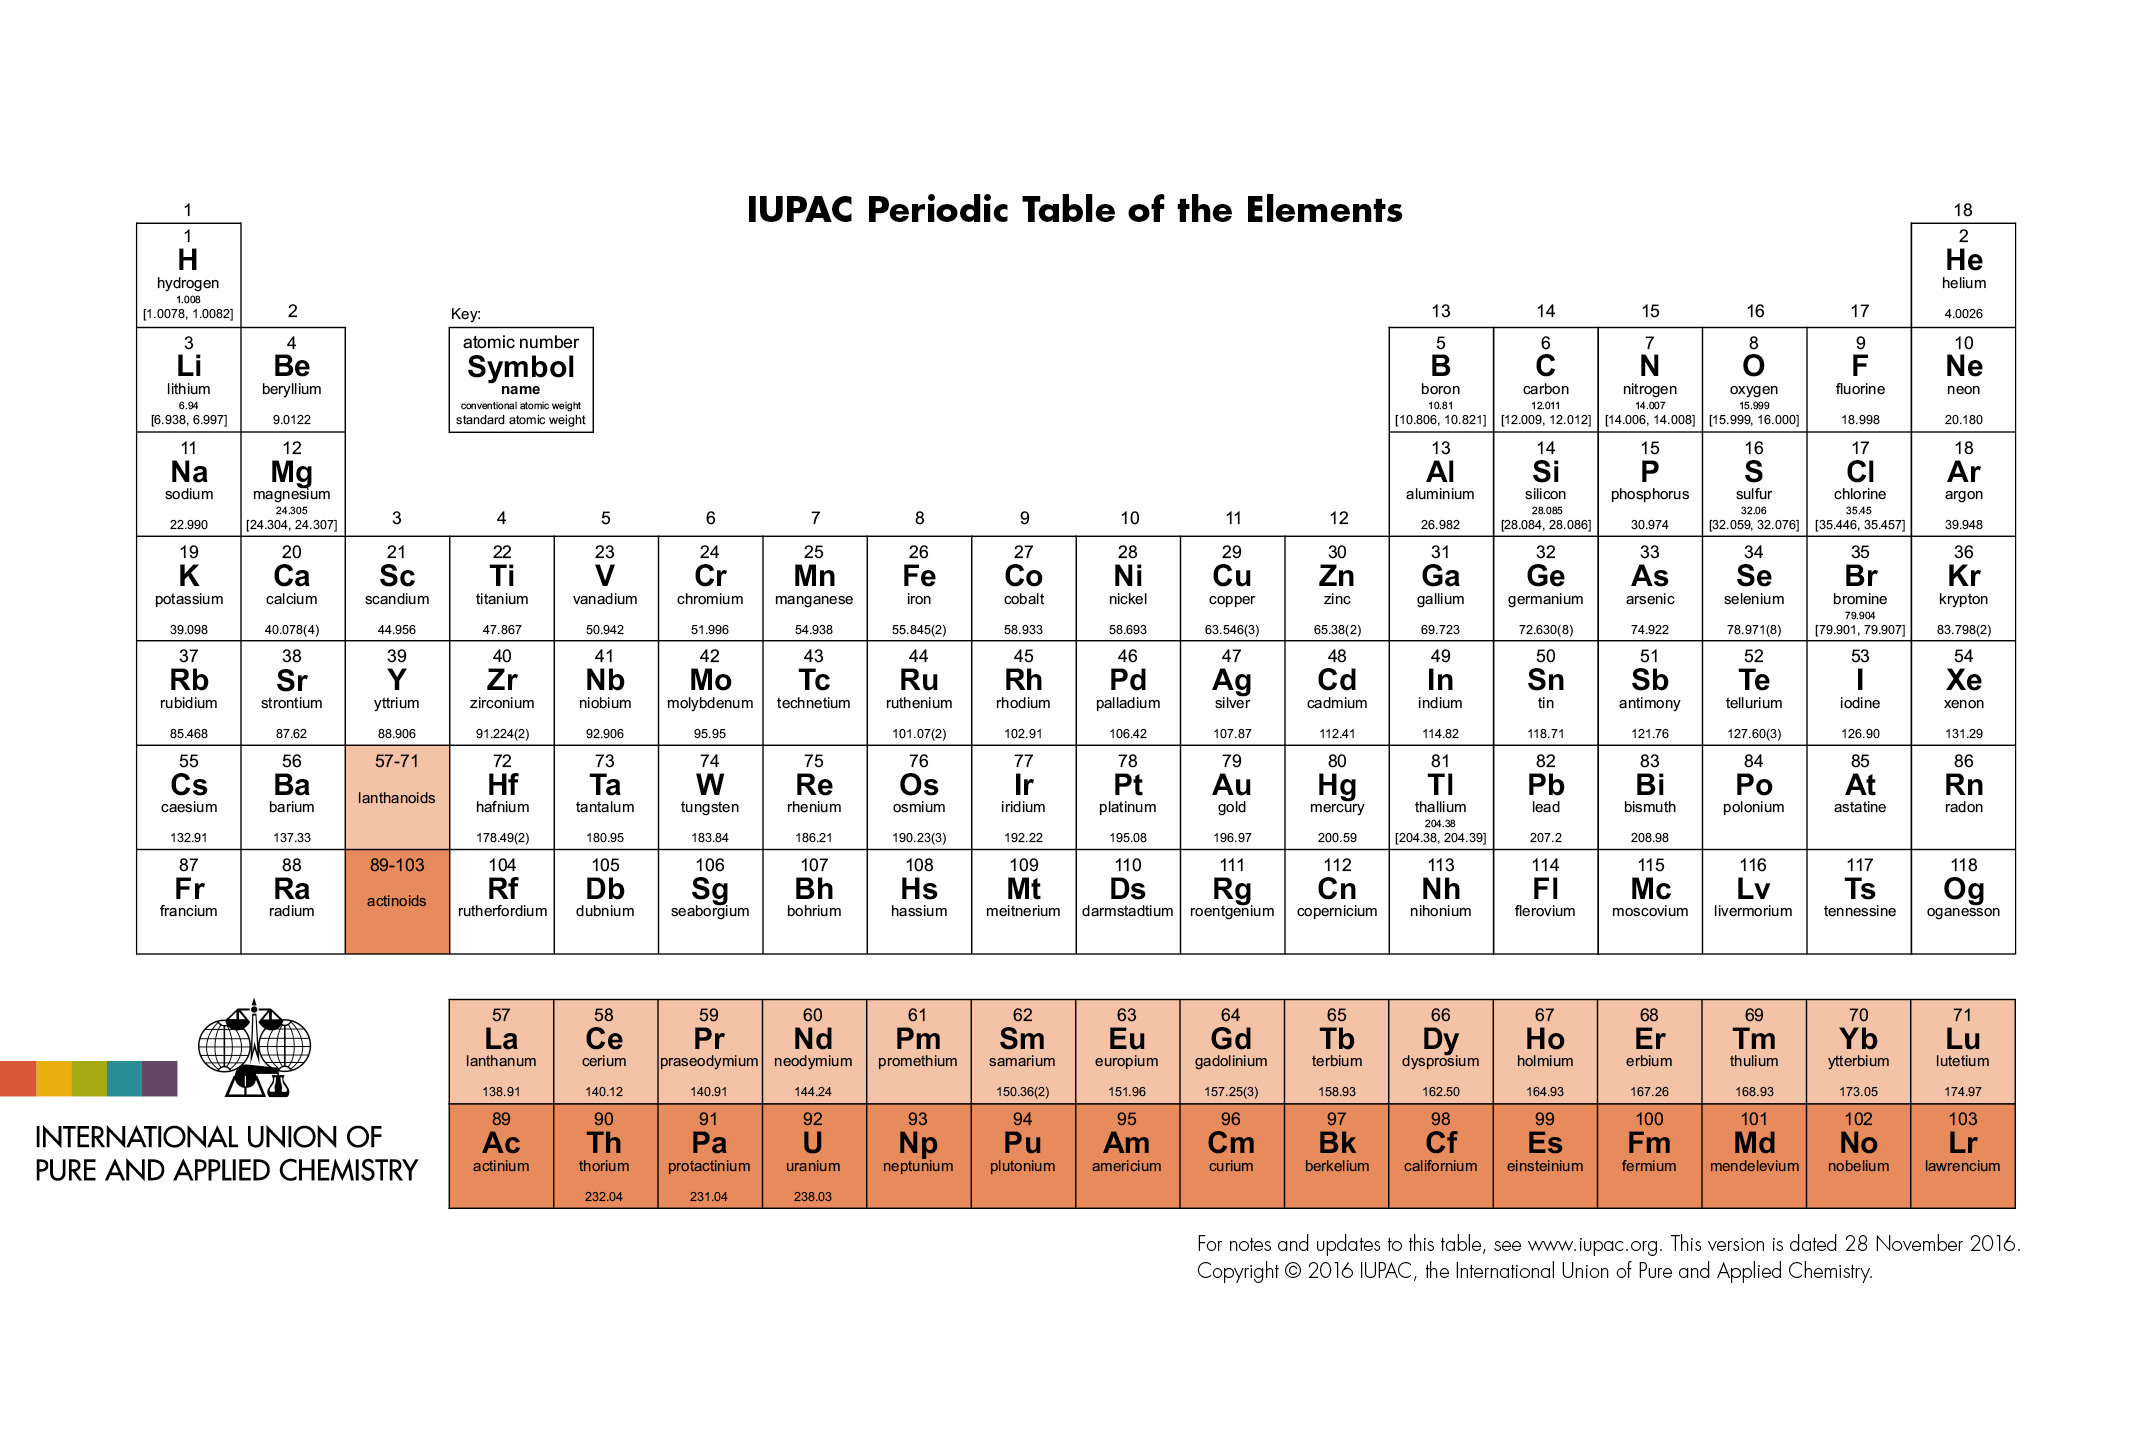 internationalunionpureappliedchemistry_periodic_table-28nov16.jpg